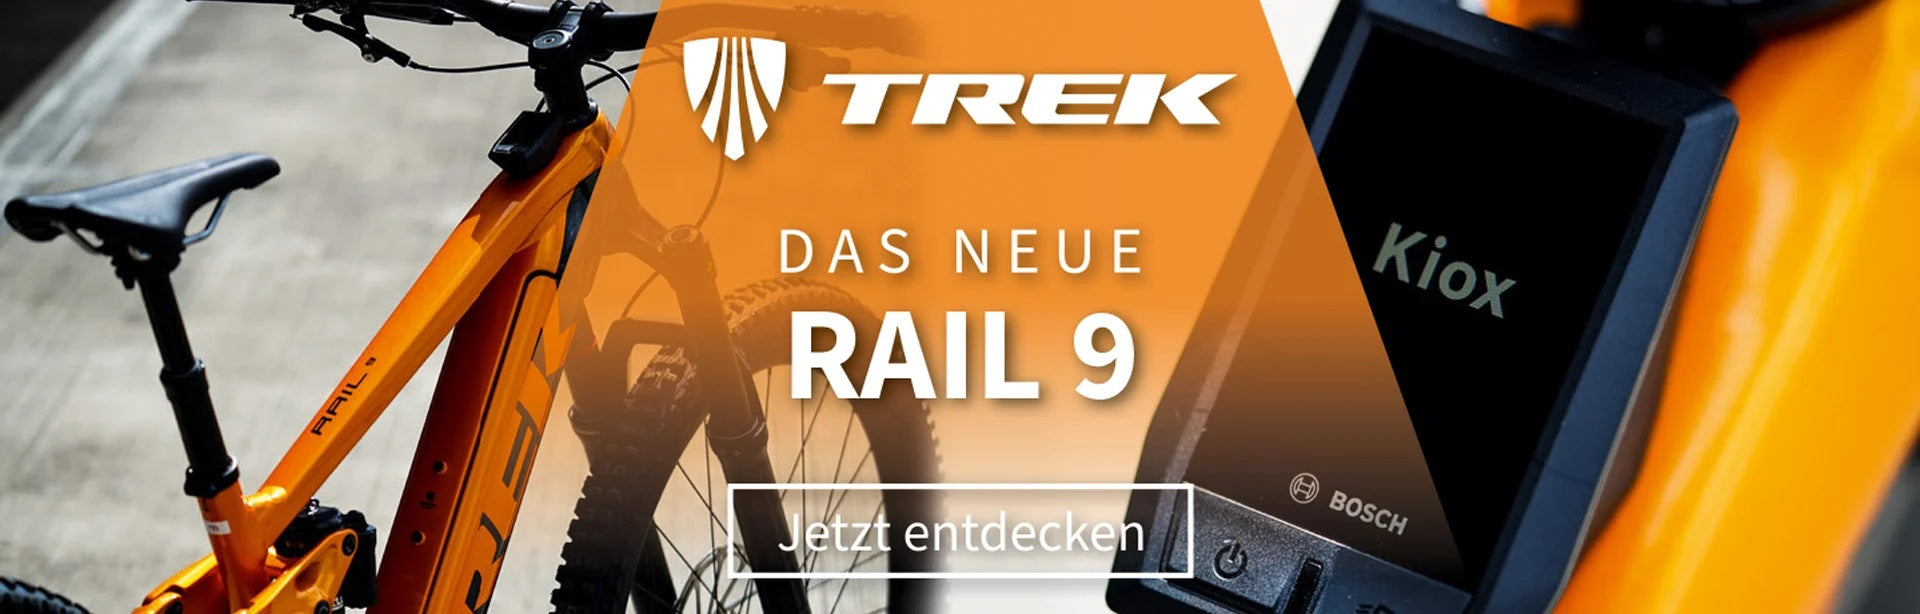 Rail günstig kaufen E-Bikes | TREK TREK e-Bike Shop